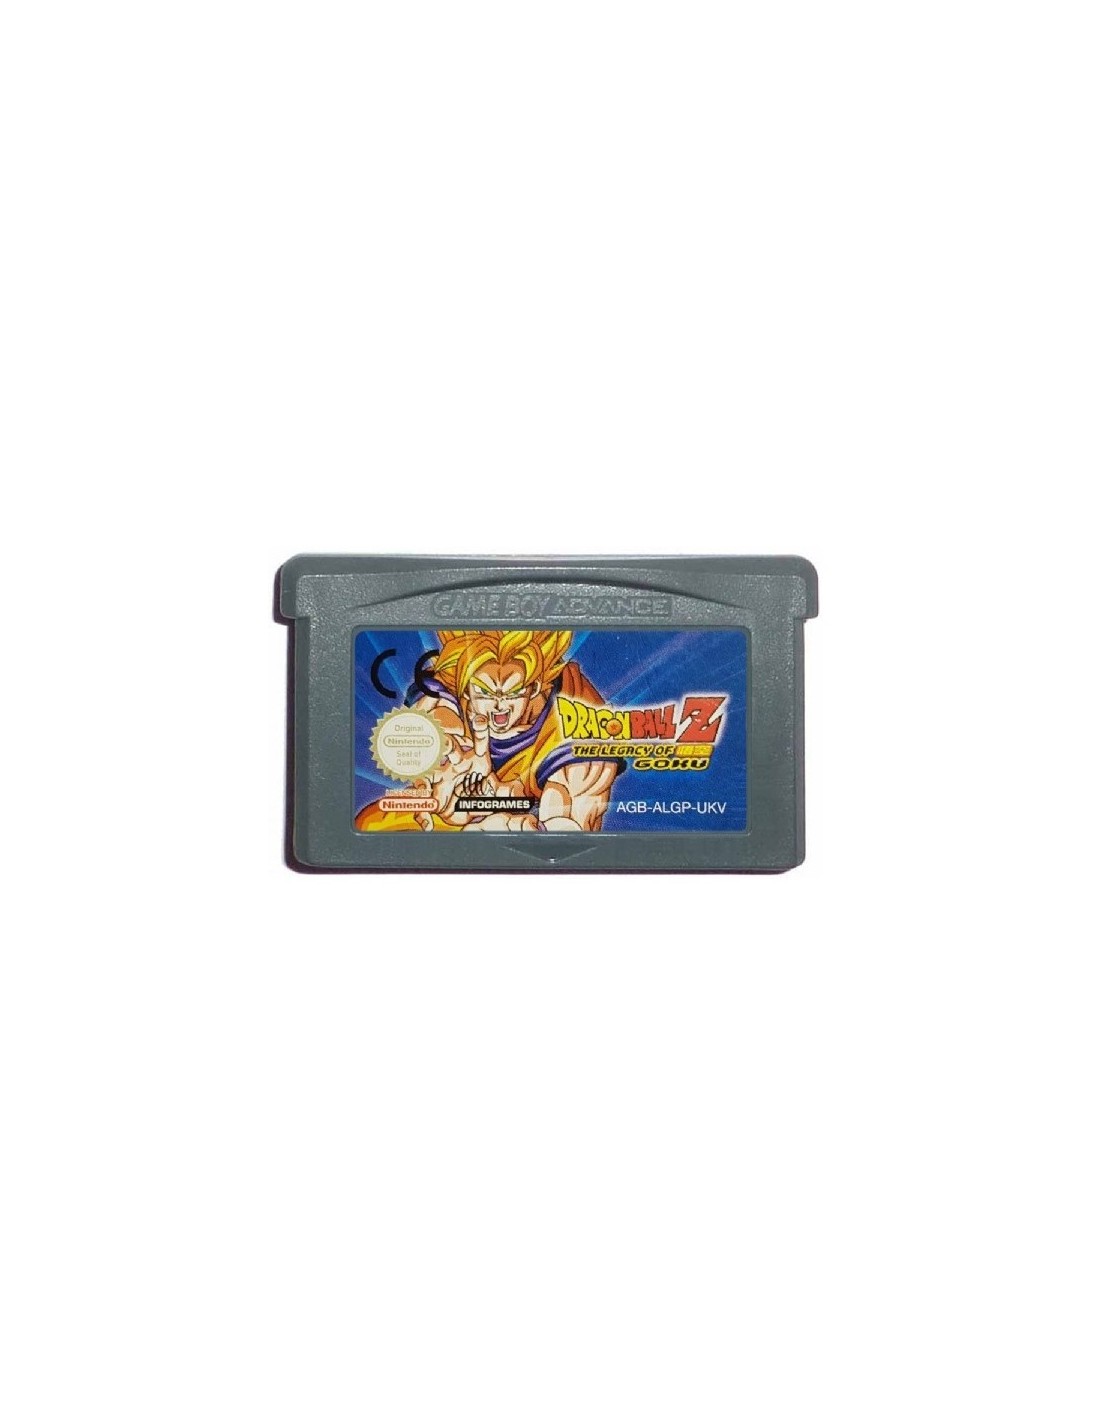 Dragon Ball Z El Legado de Goku Game Boy Advance